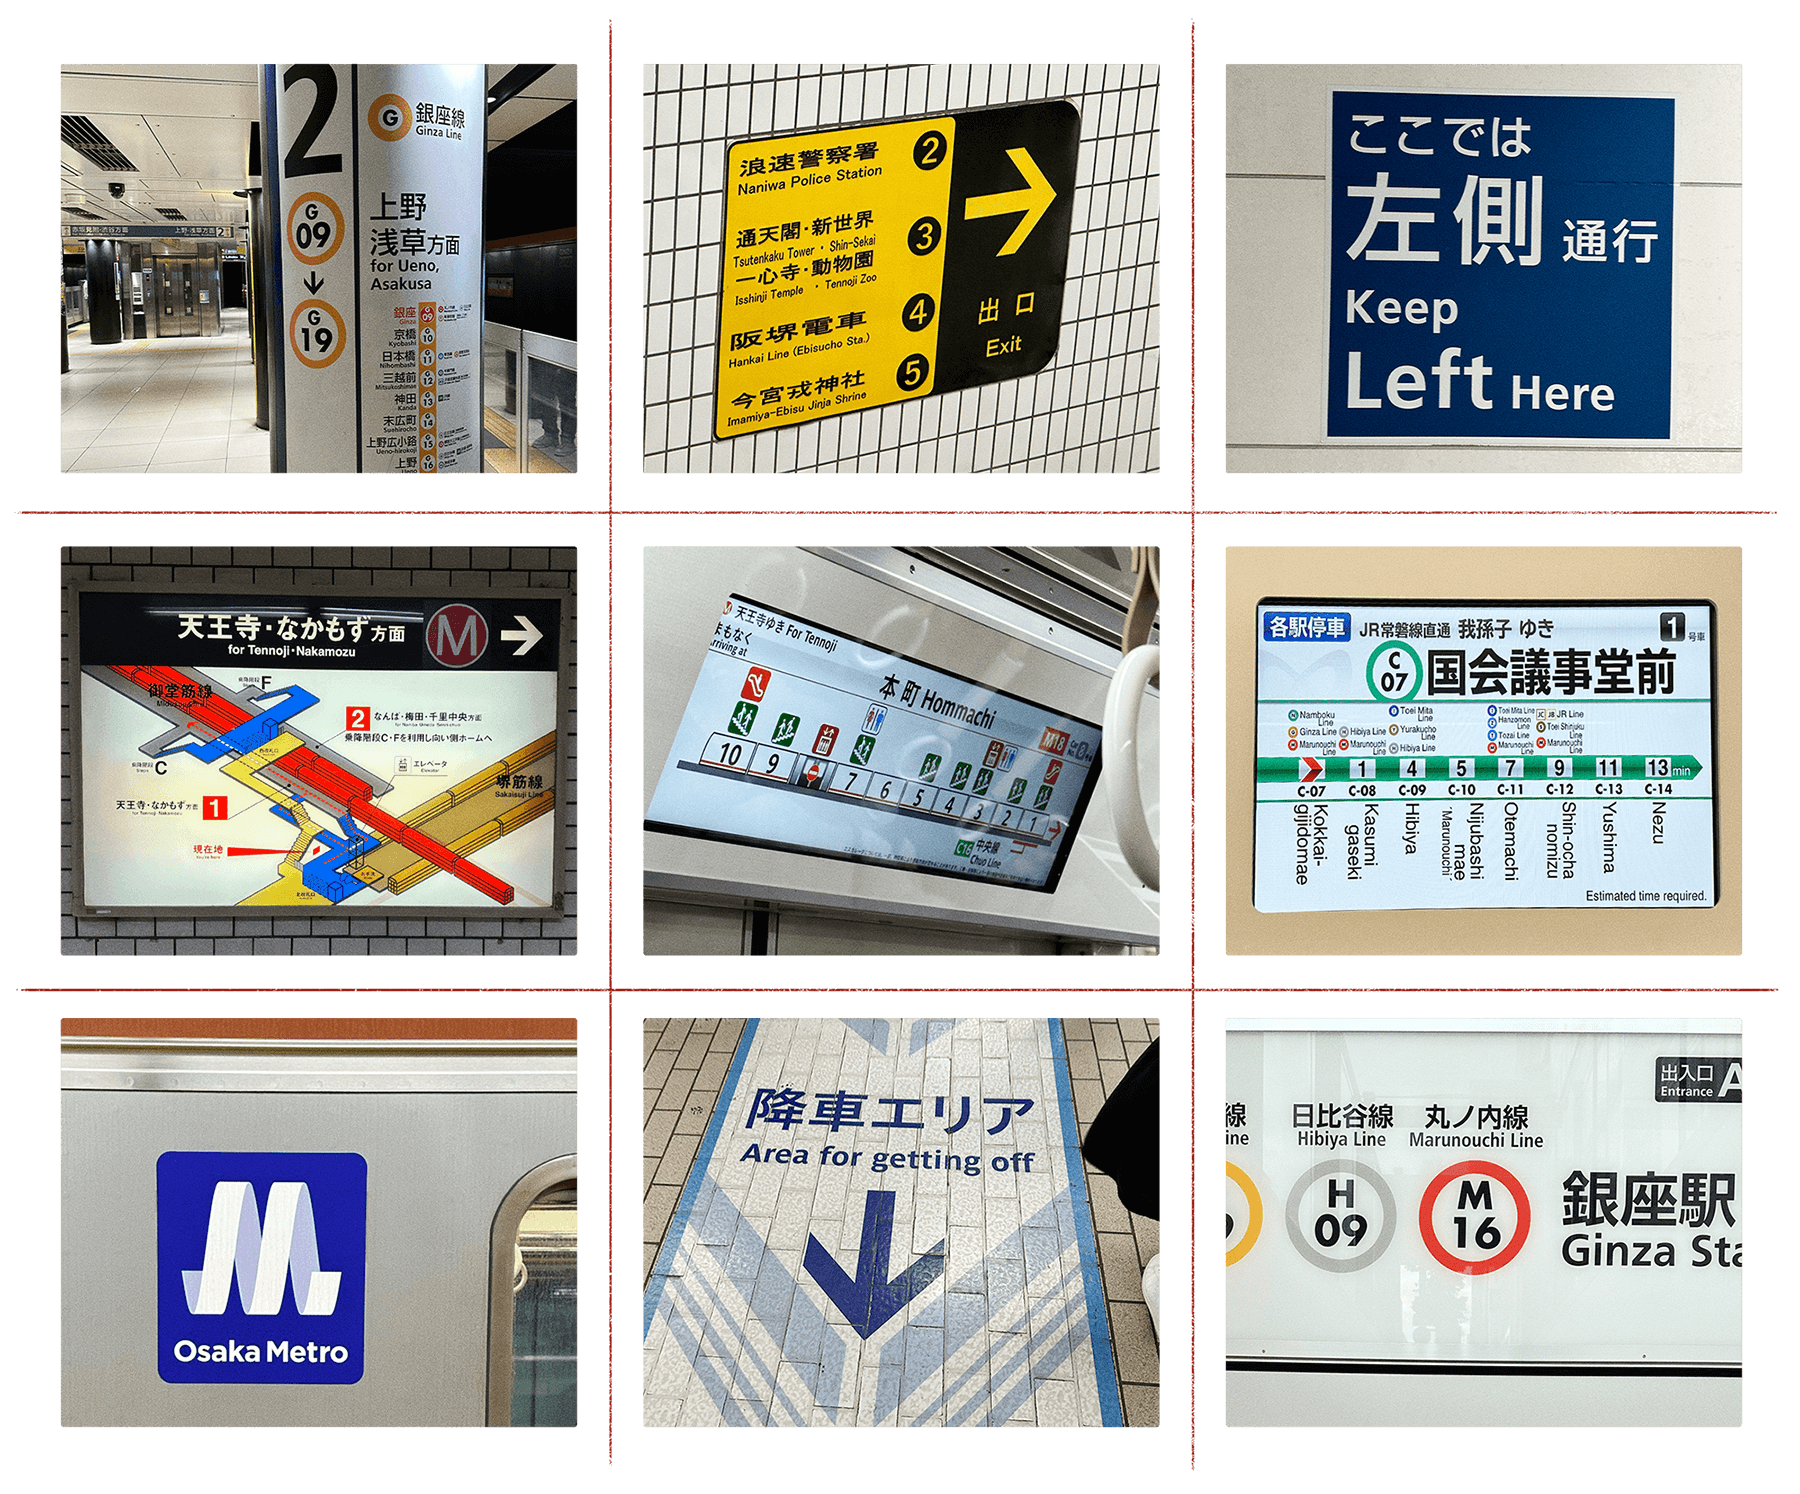 Photo grid of wayfinding signage seen around Japanese train stations